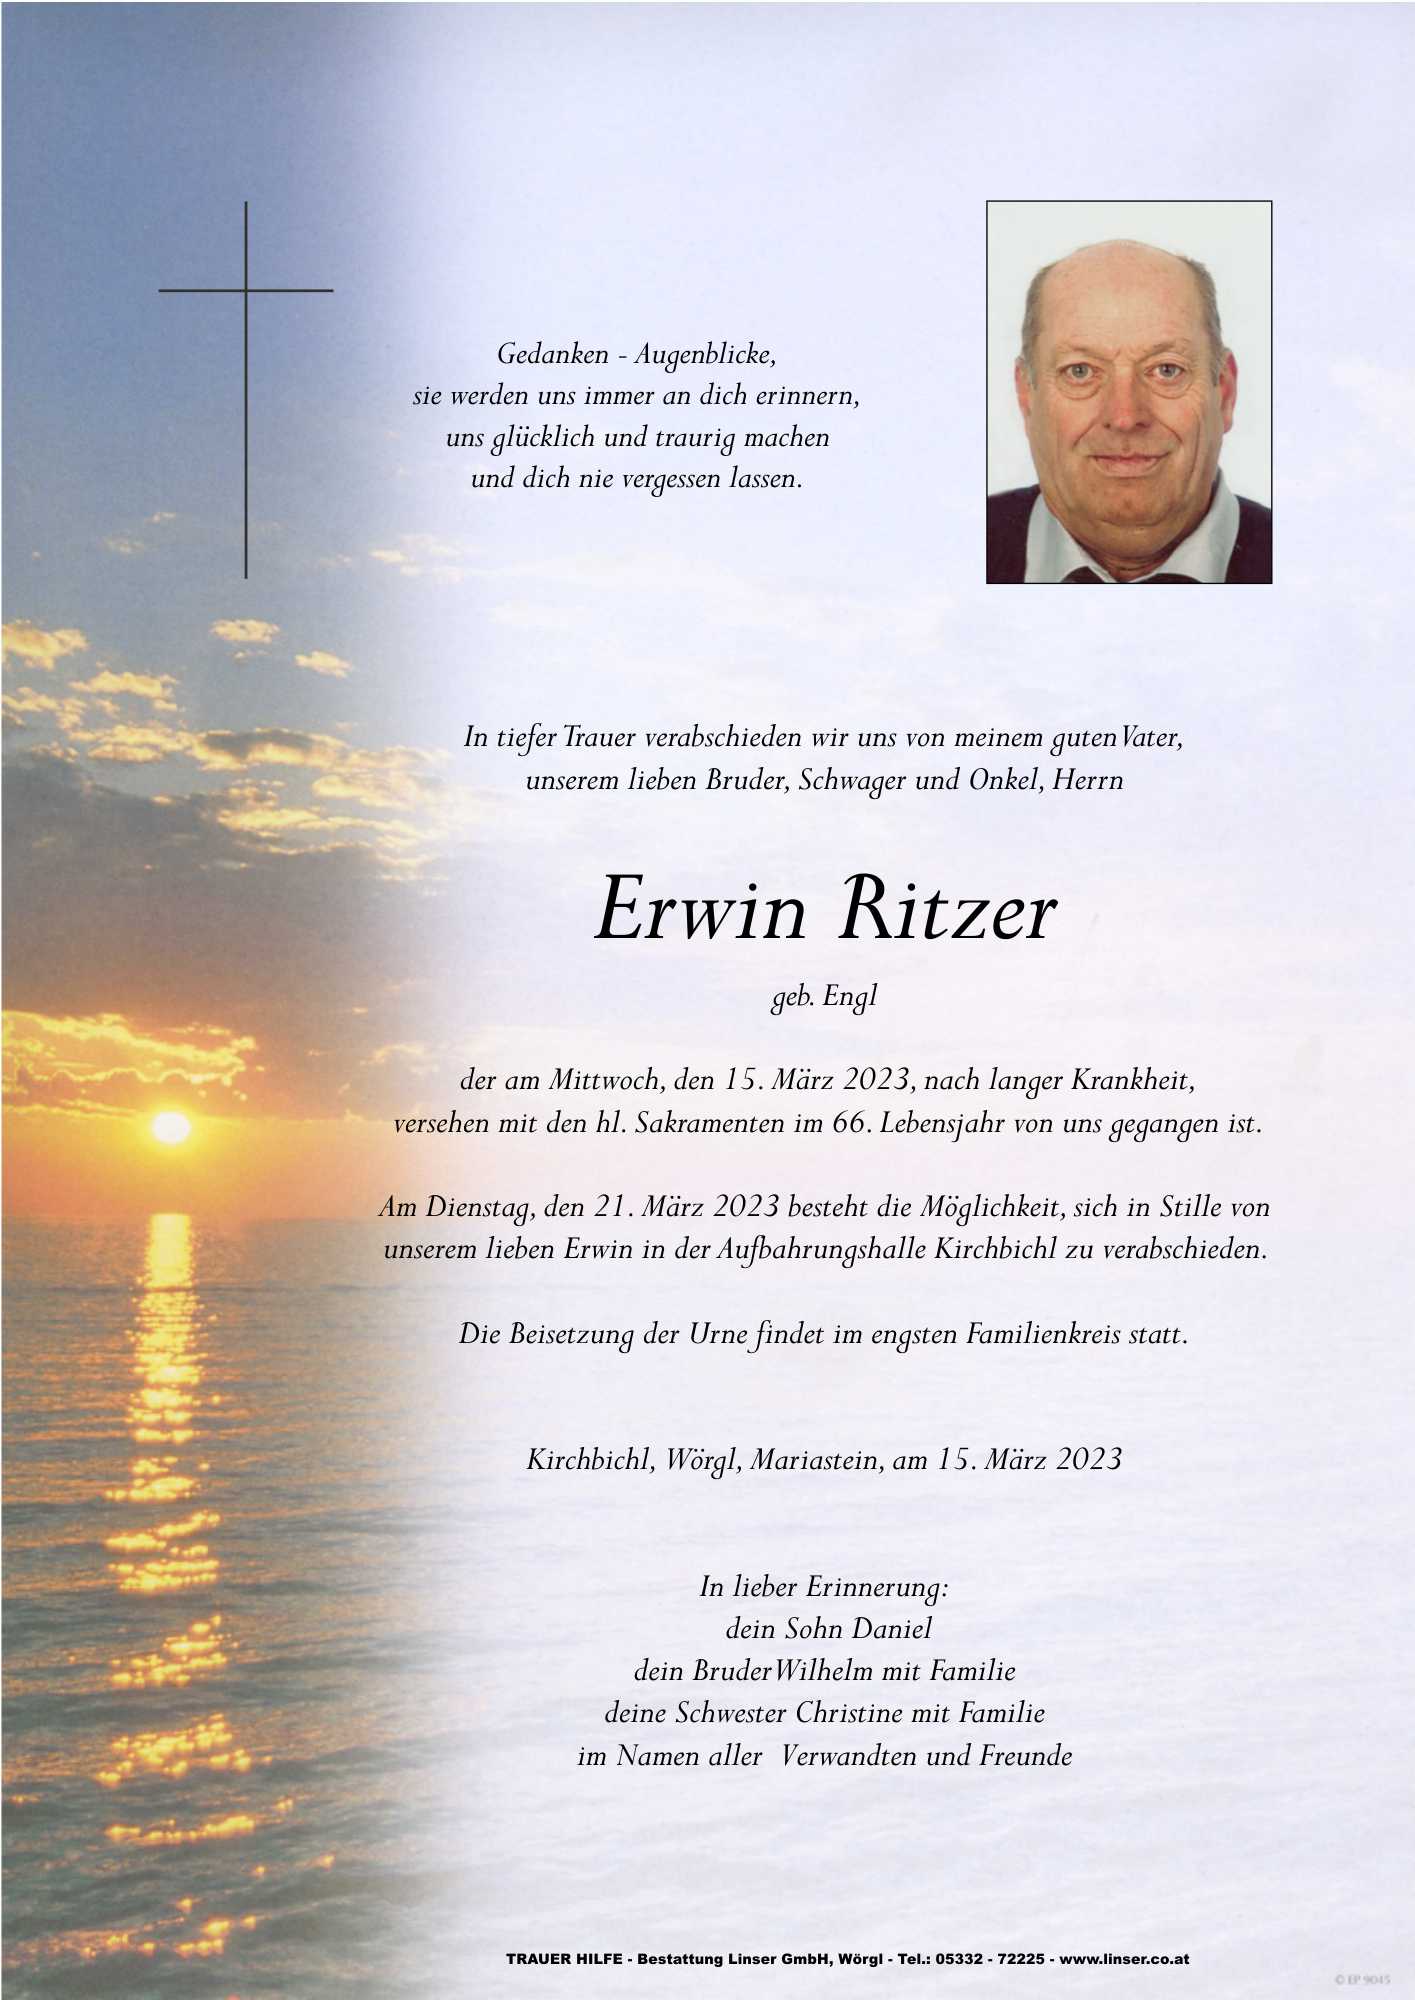 Erwin Ritzer